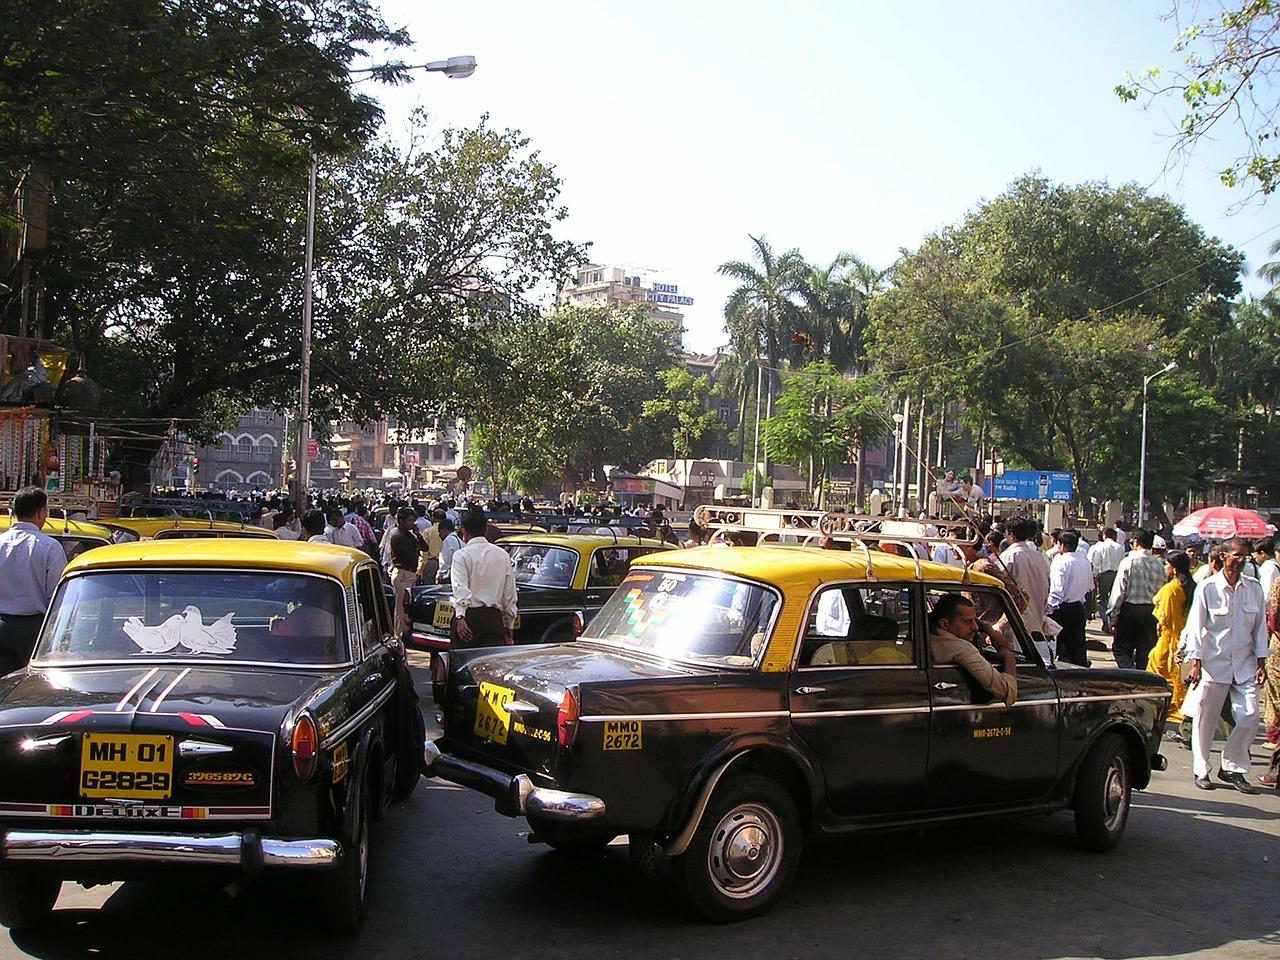 traffic in mumbai, India